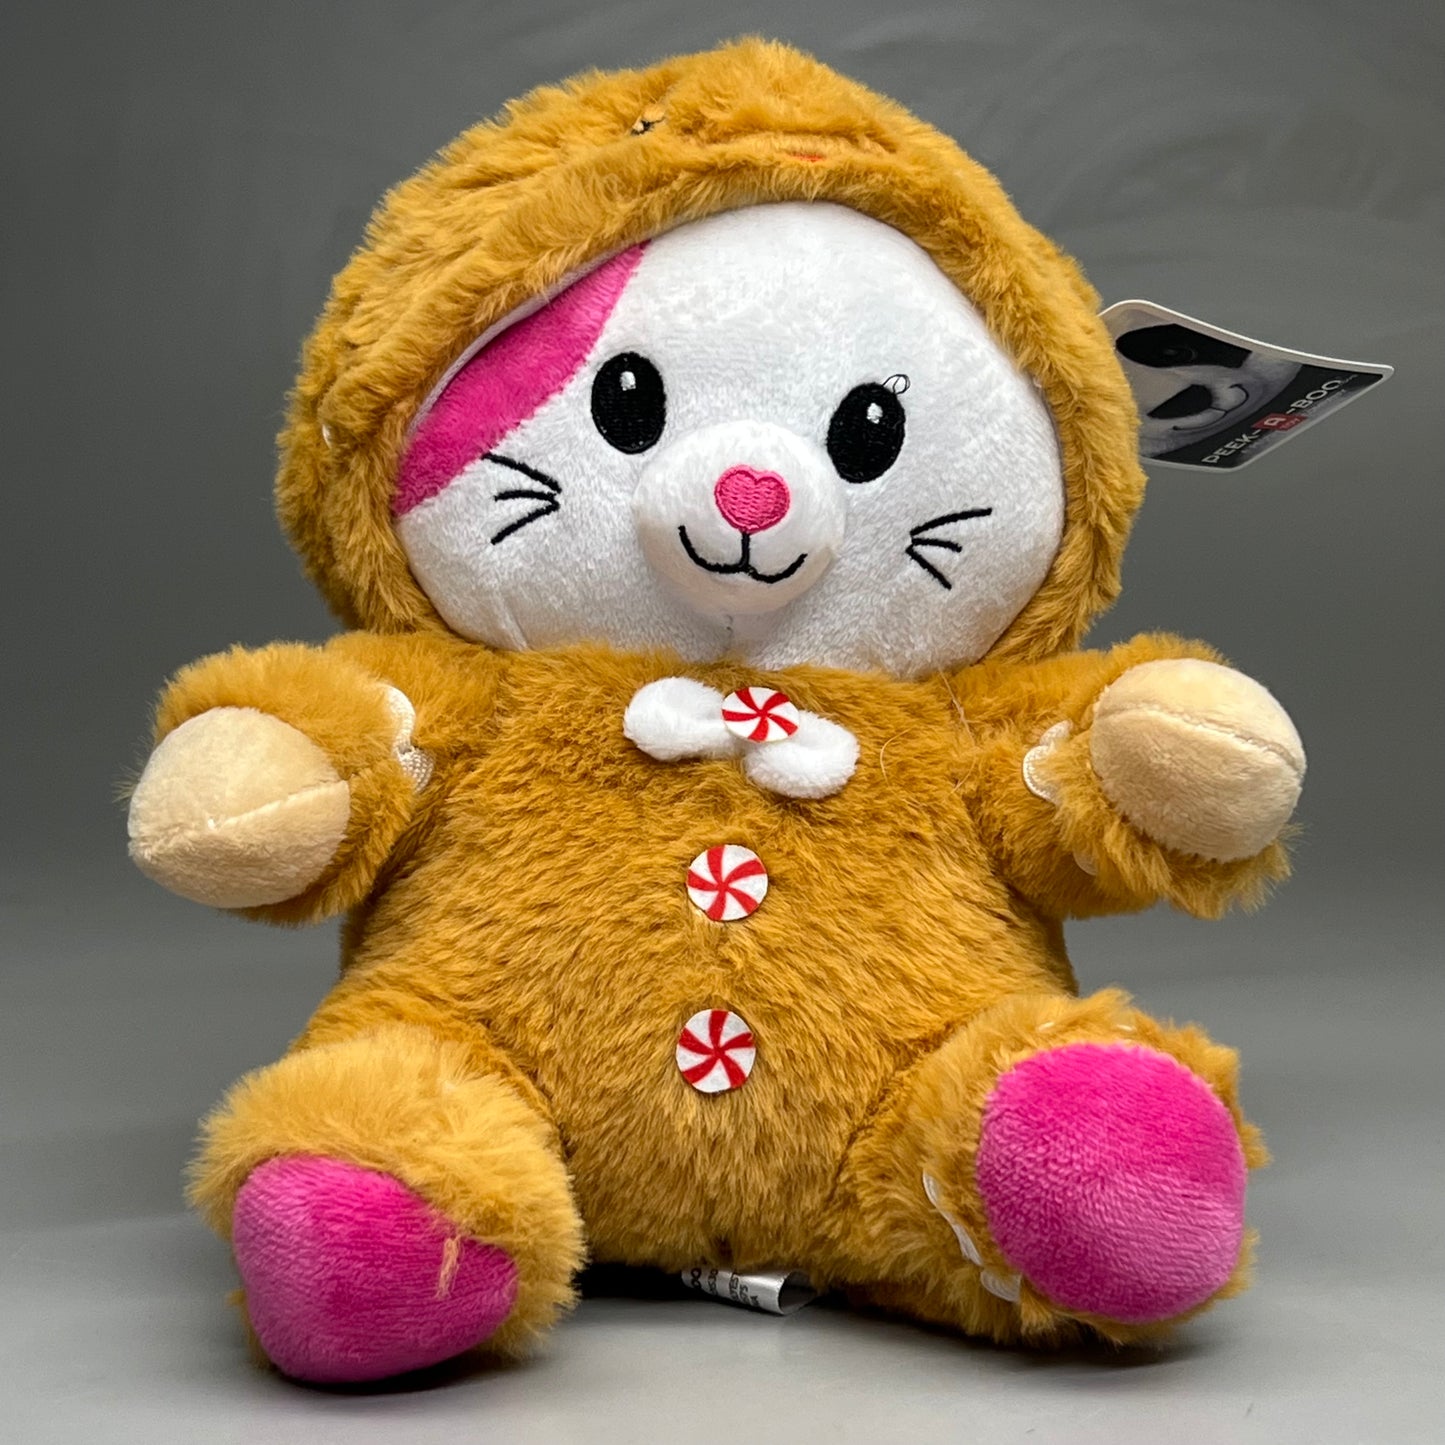 PEEK A BOO TOYS Kitty / Gingerbread Man Stuffed Animal Brown/ White/ Pink XMASDIS30